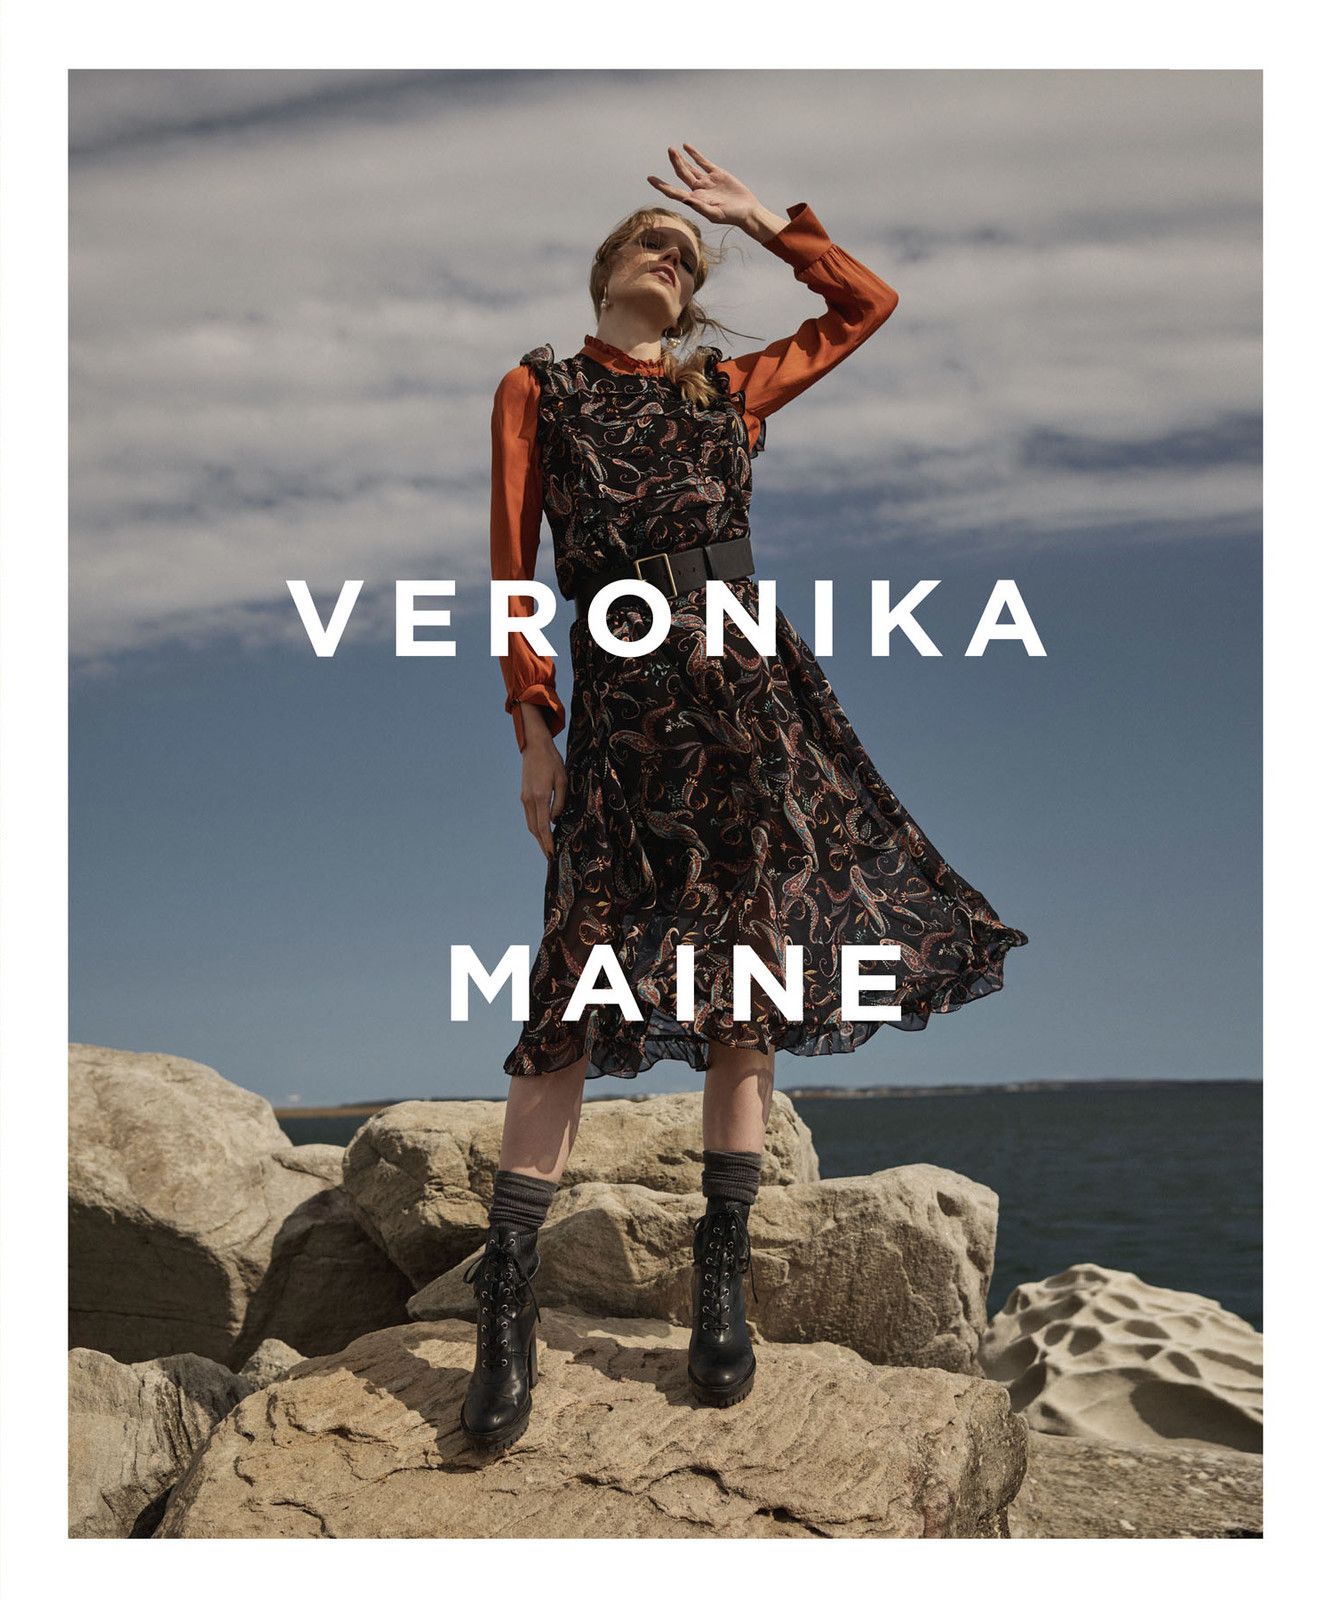 Veronika Maine